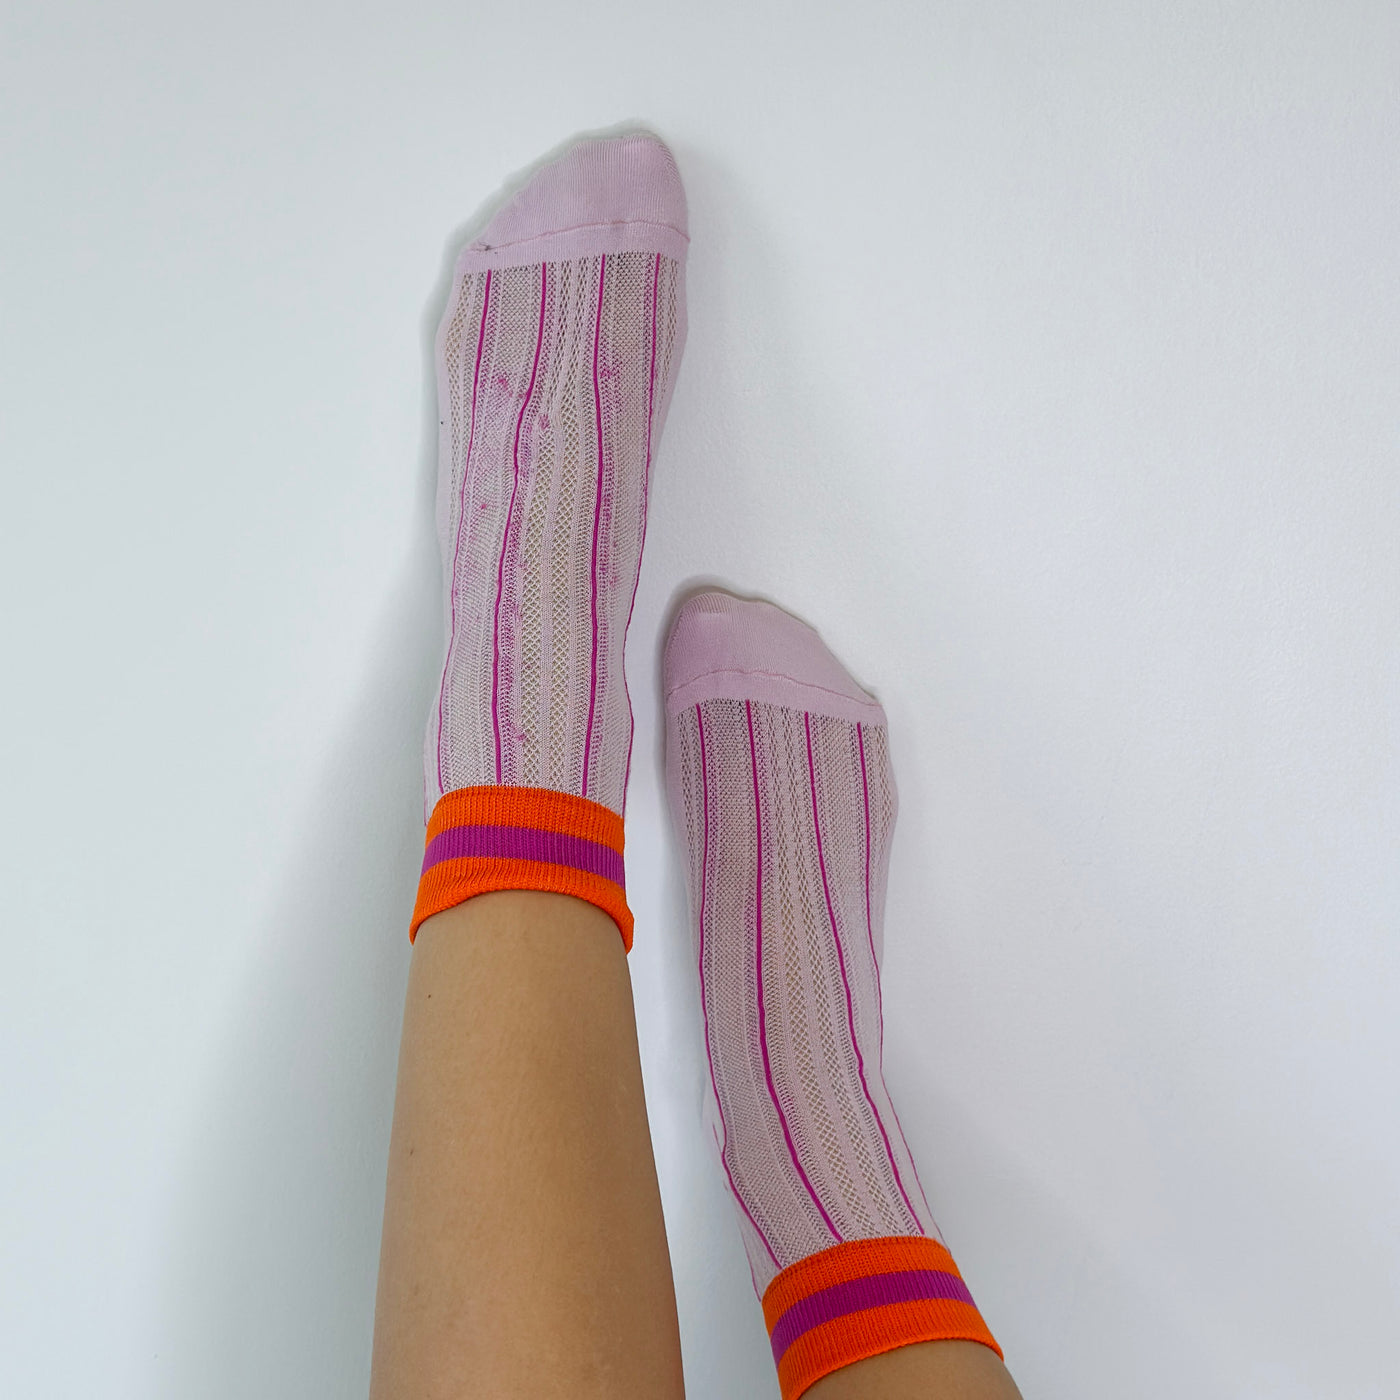 Retro Striped Sheer Anklet Socks